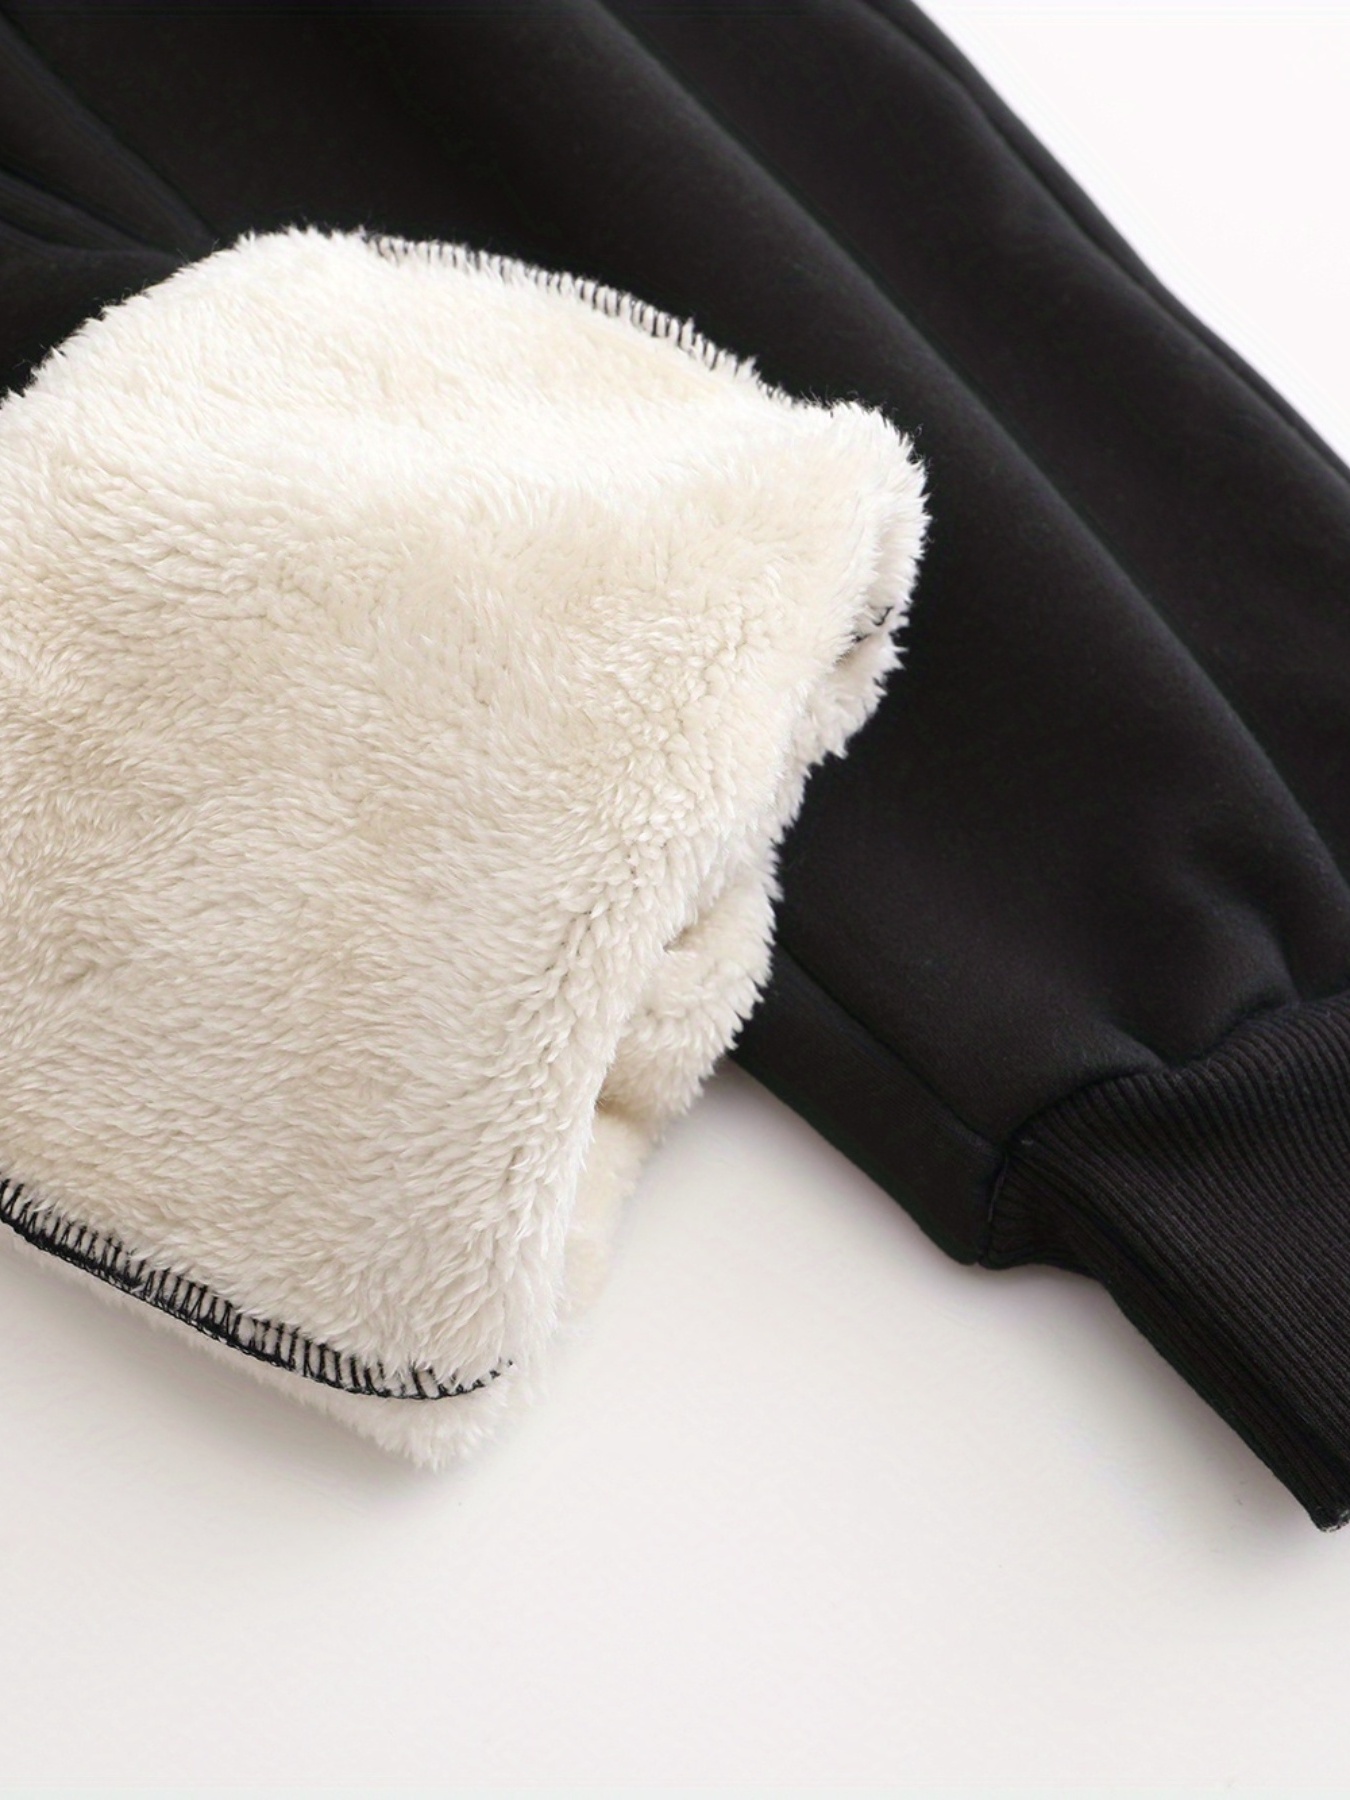 plush thermal pants, winter plush thermal pants casual drawstring pocket pants womens clothing details 19